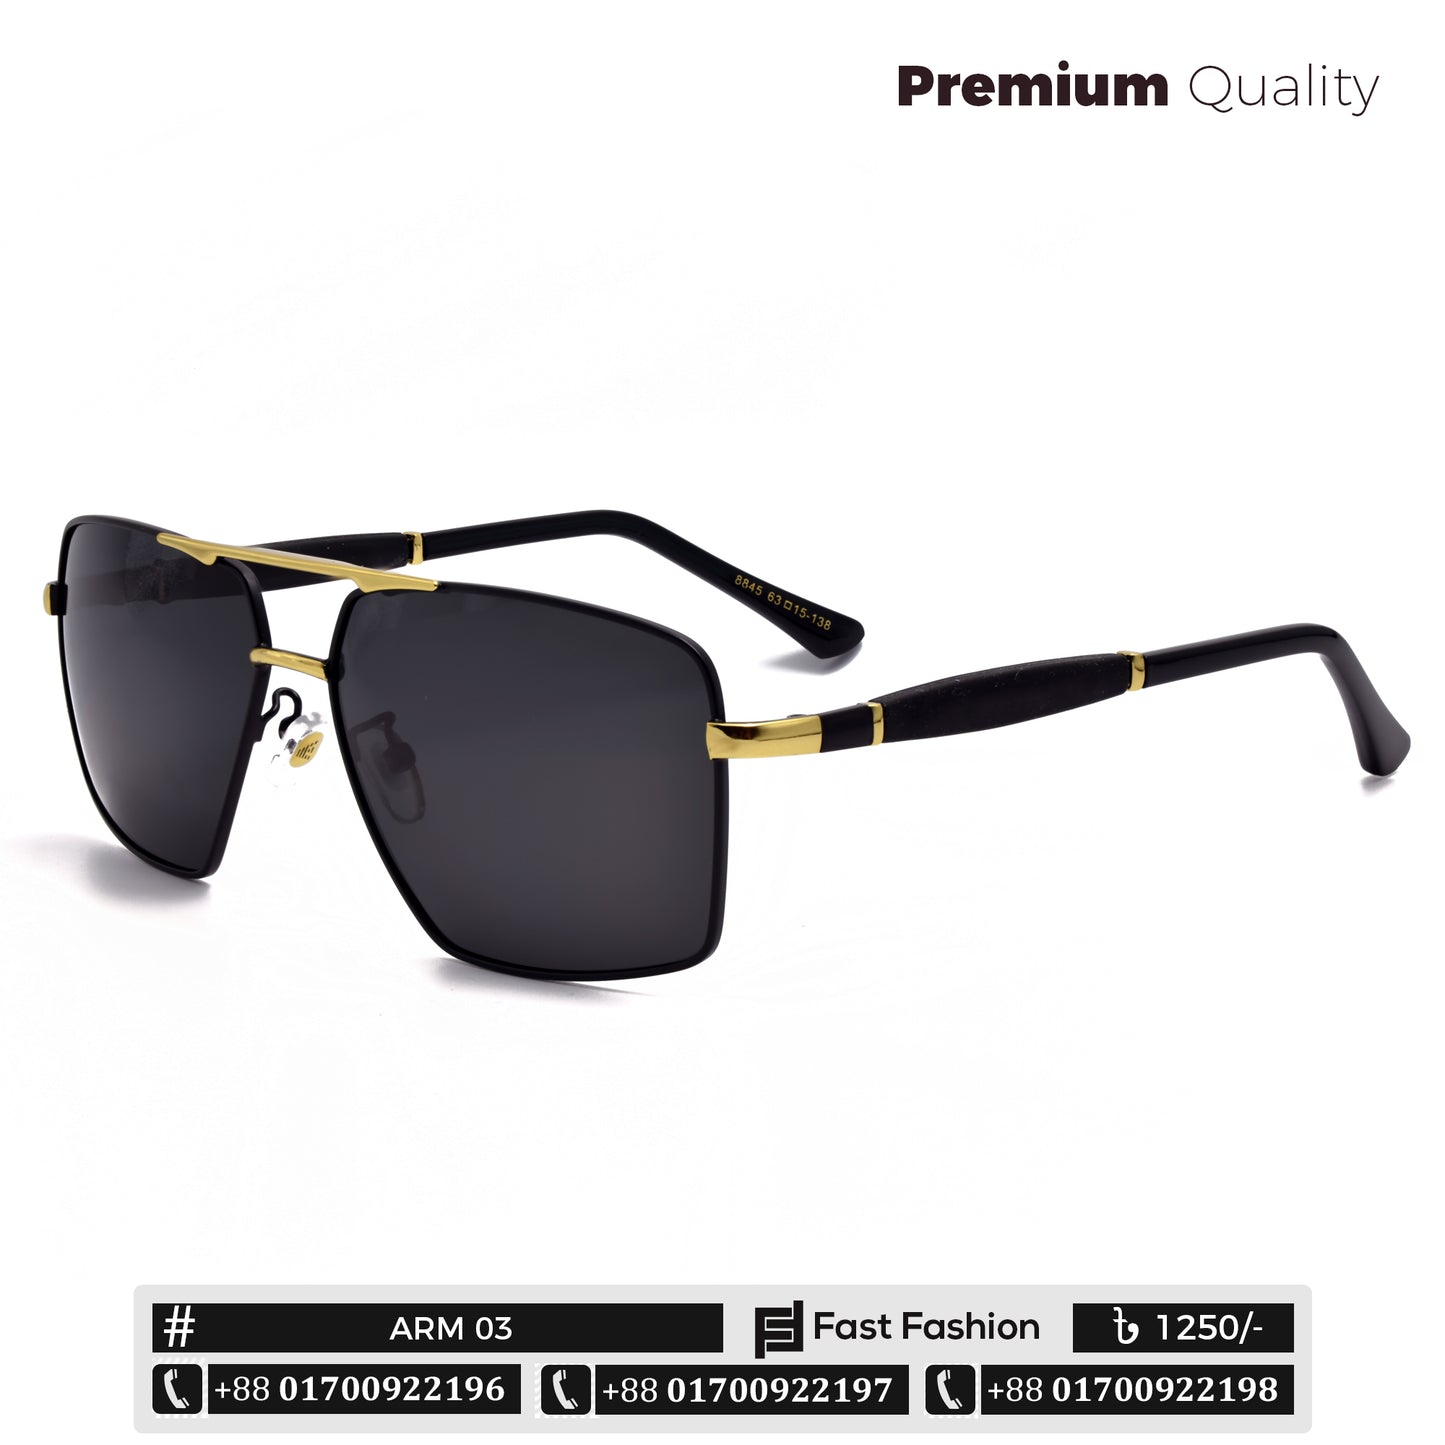 Premium Quality Trendy Stylish Sunglass | ARM 03